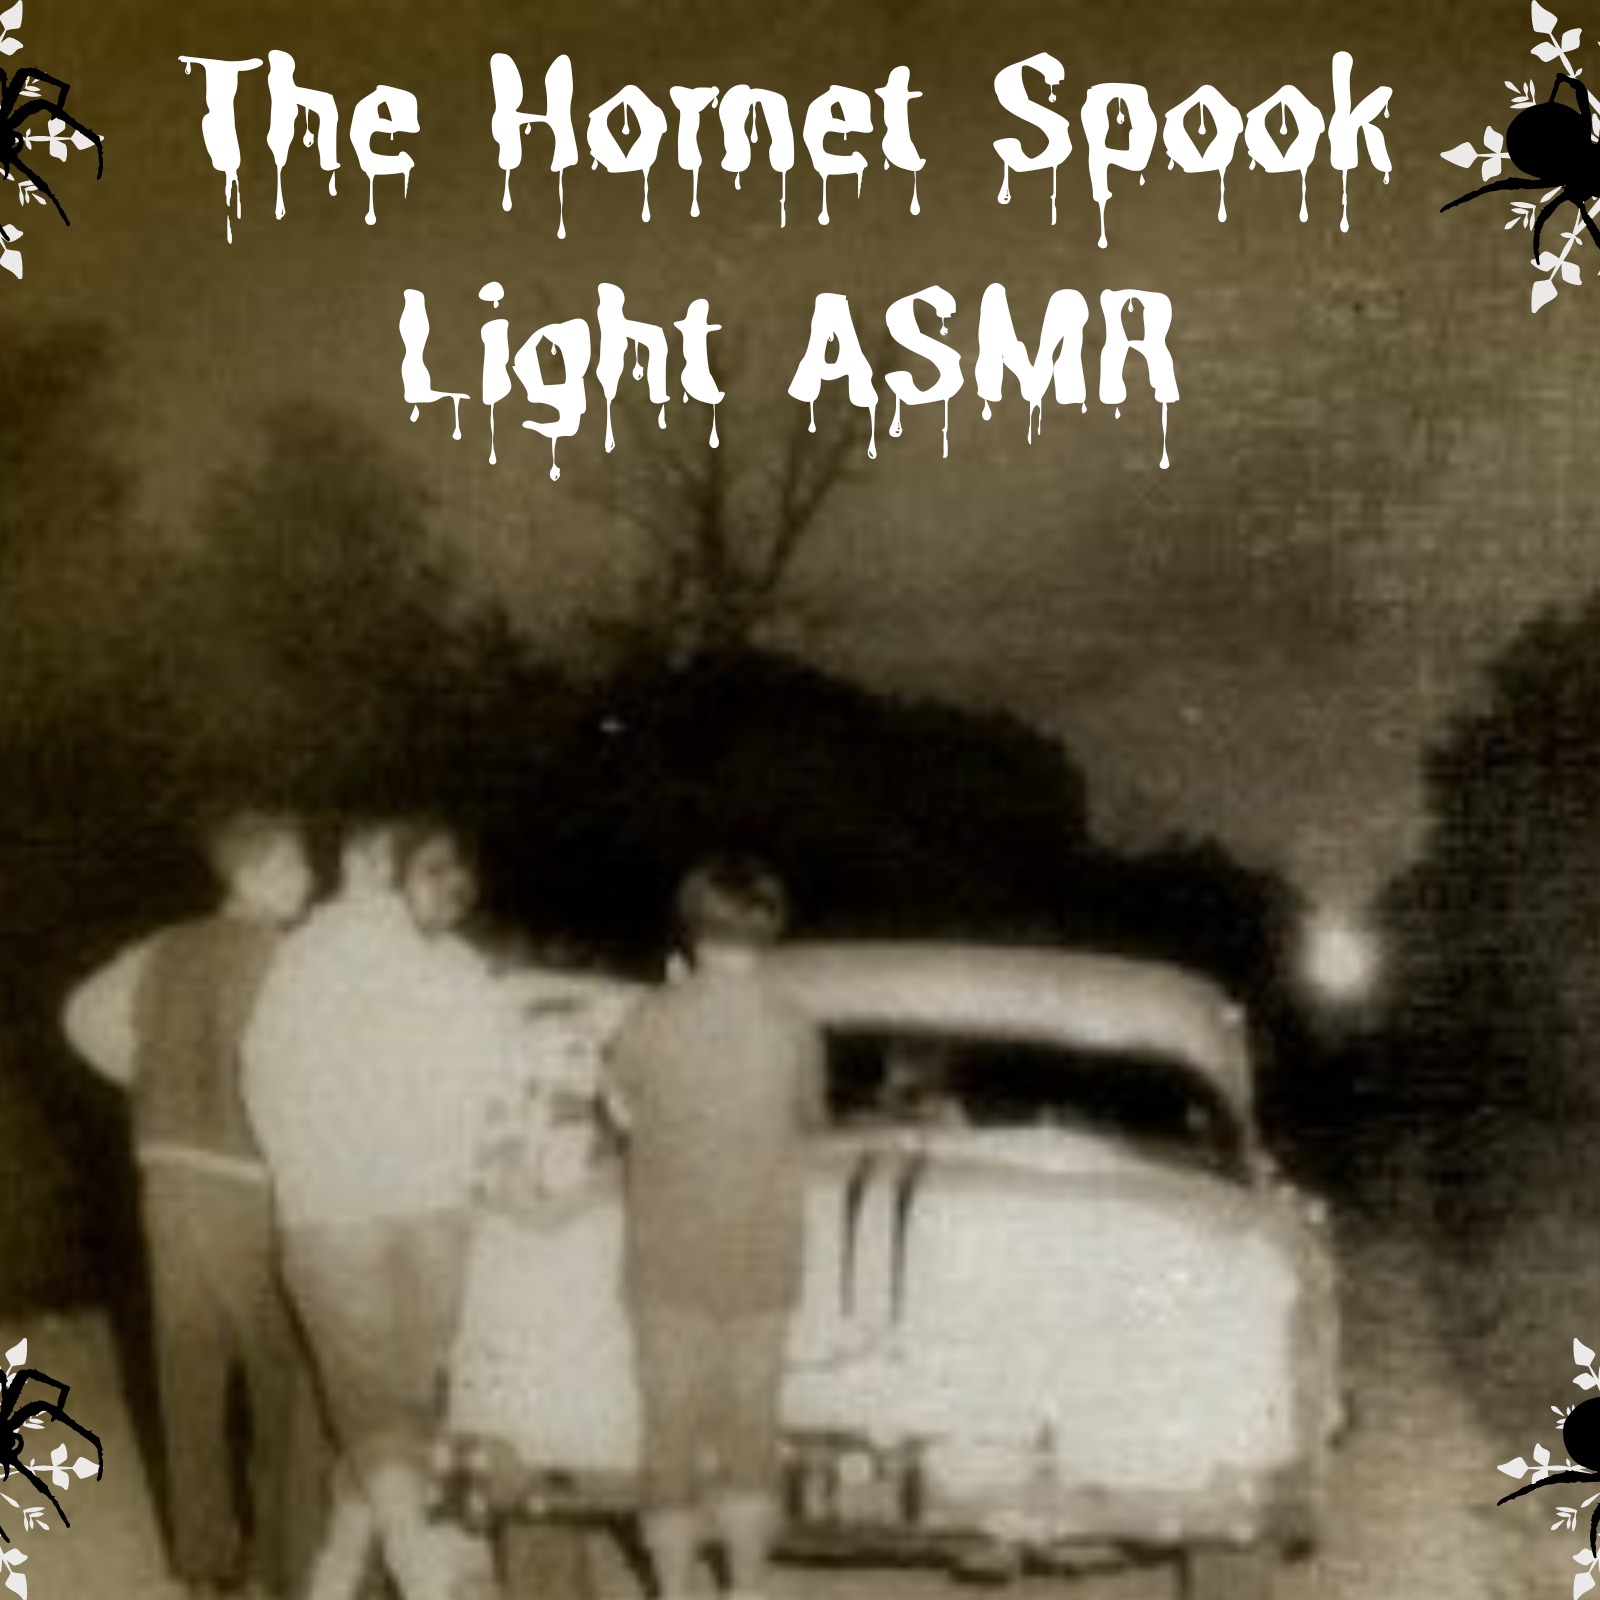 The Hornet Spook Light Story & Crackling Fireplace ASMR